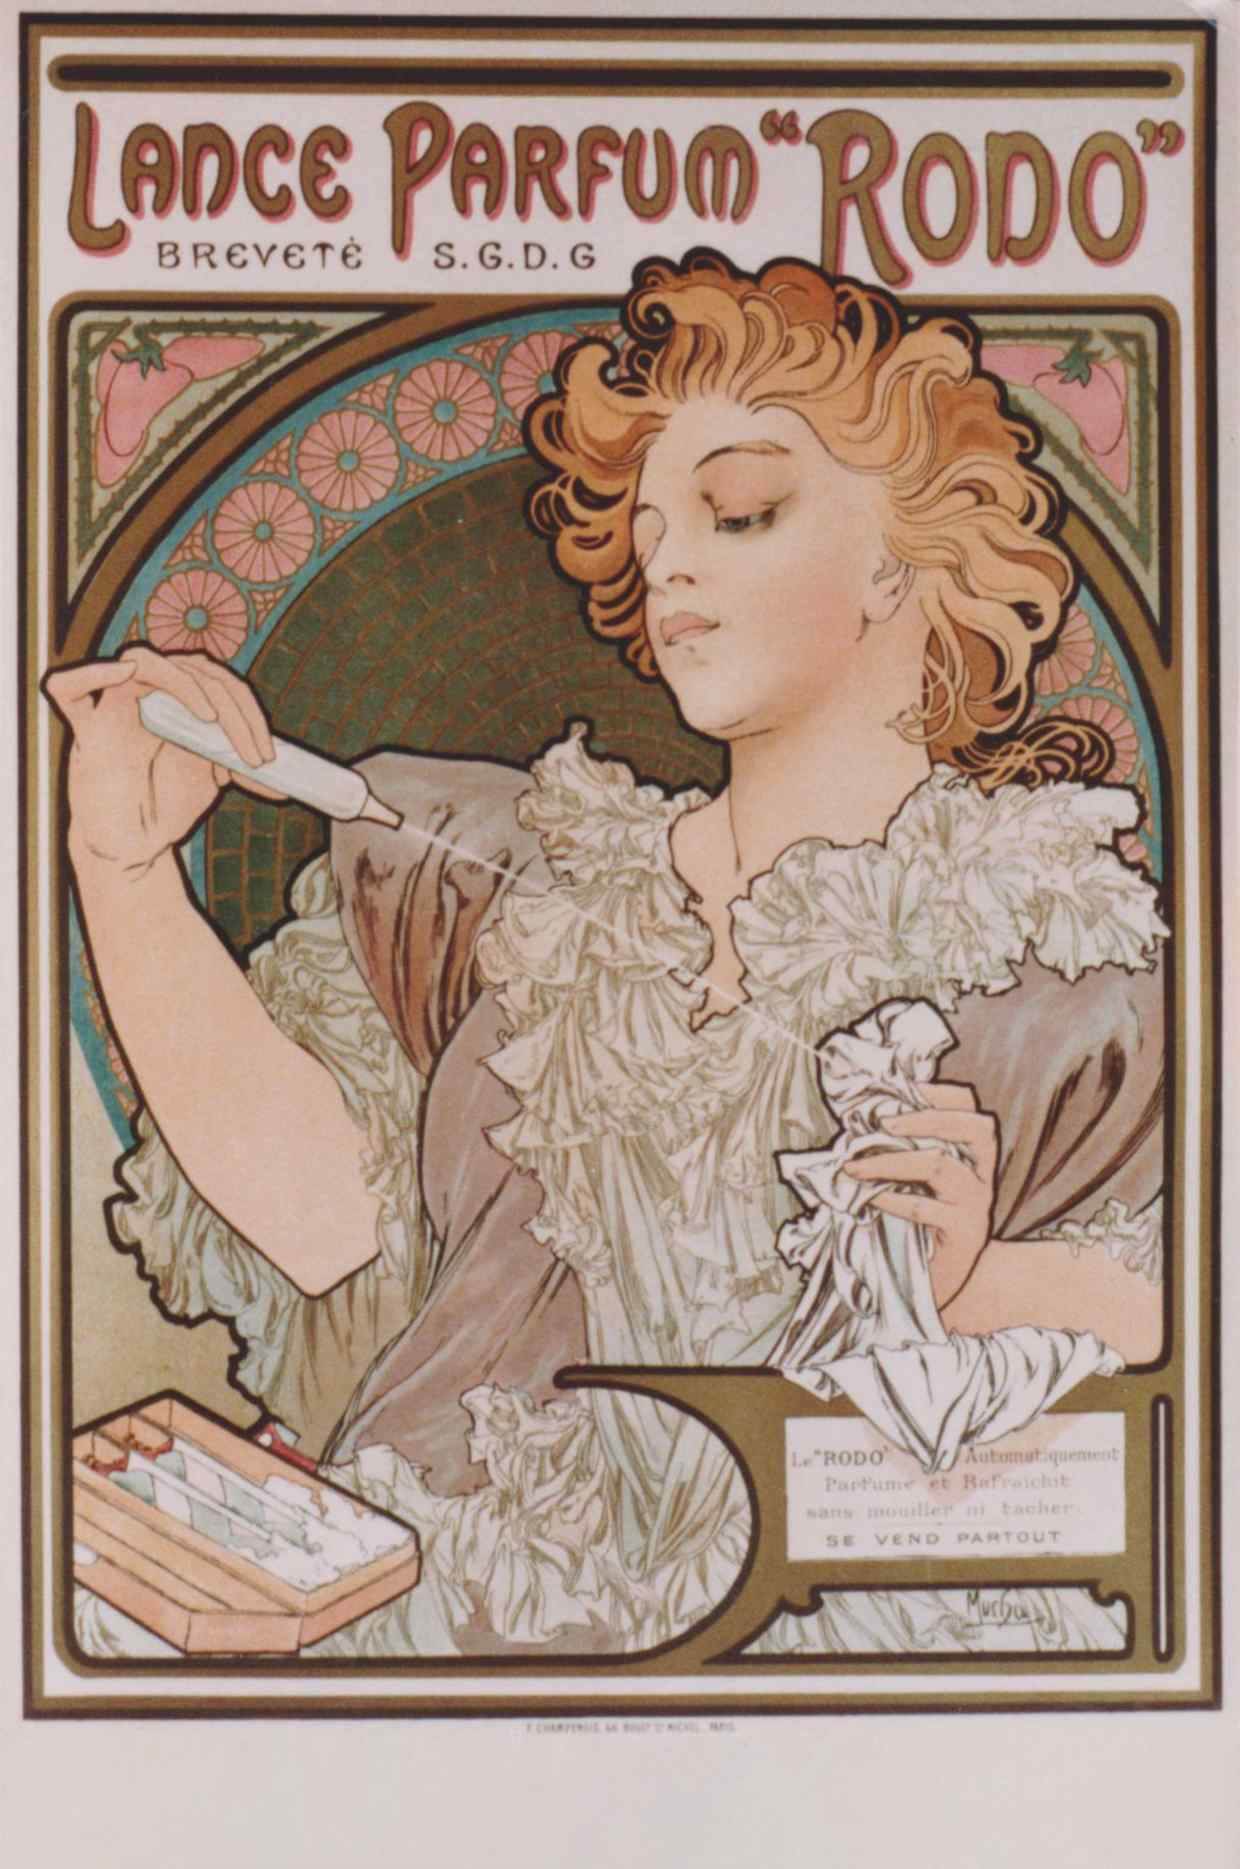 1896., Alphonse Mucha, Lance Parfum “Rodo” poster, iz kolekcije Erica Kellenbergera